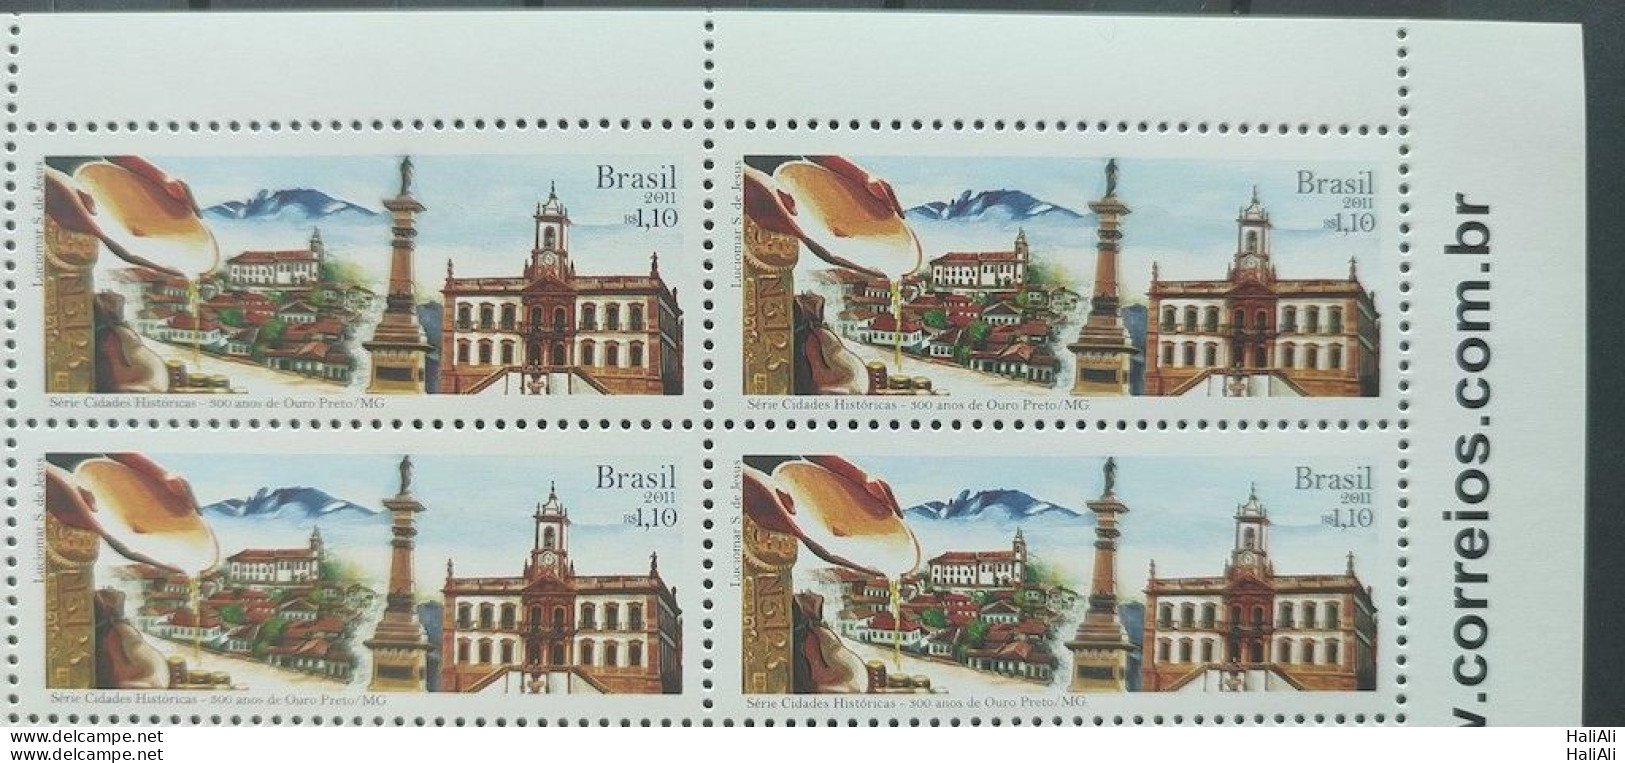 C 3097 Brazil Stamp Historical Cities Ouro Preto MG 2011 Block Of 4 Vignette Site - Nuovi